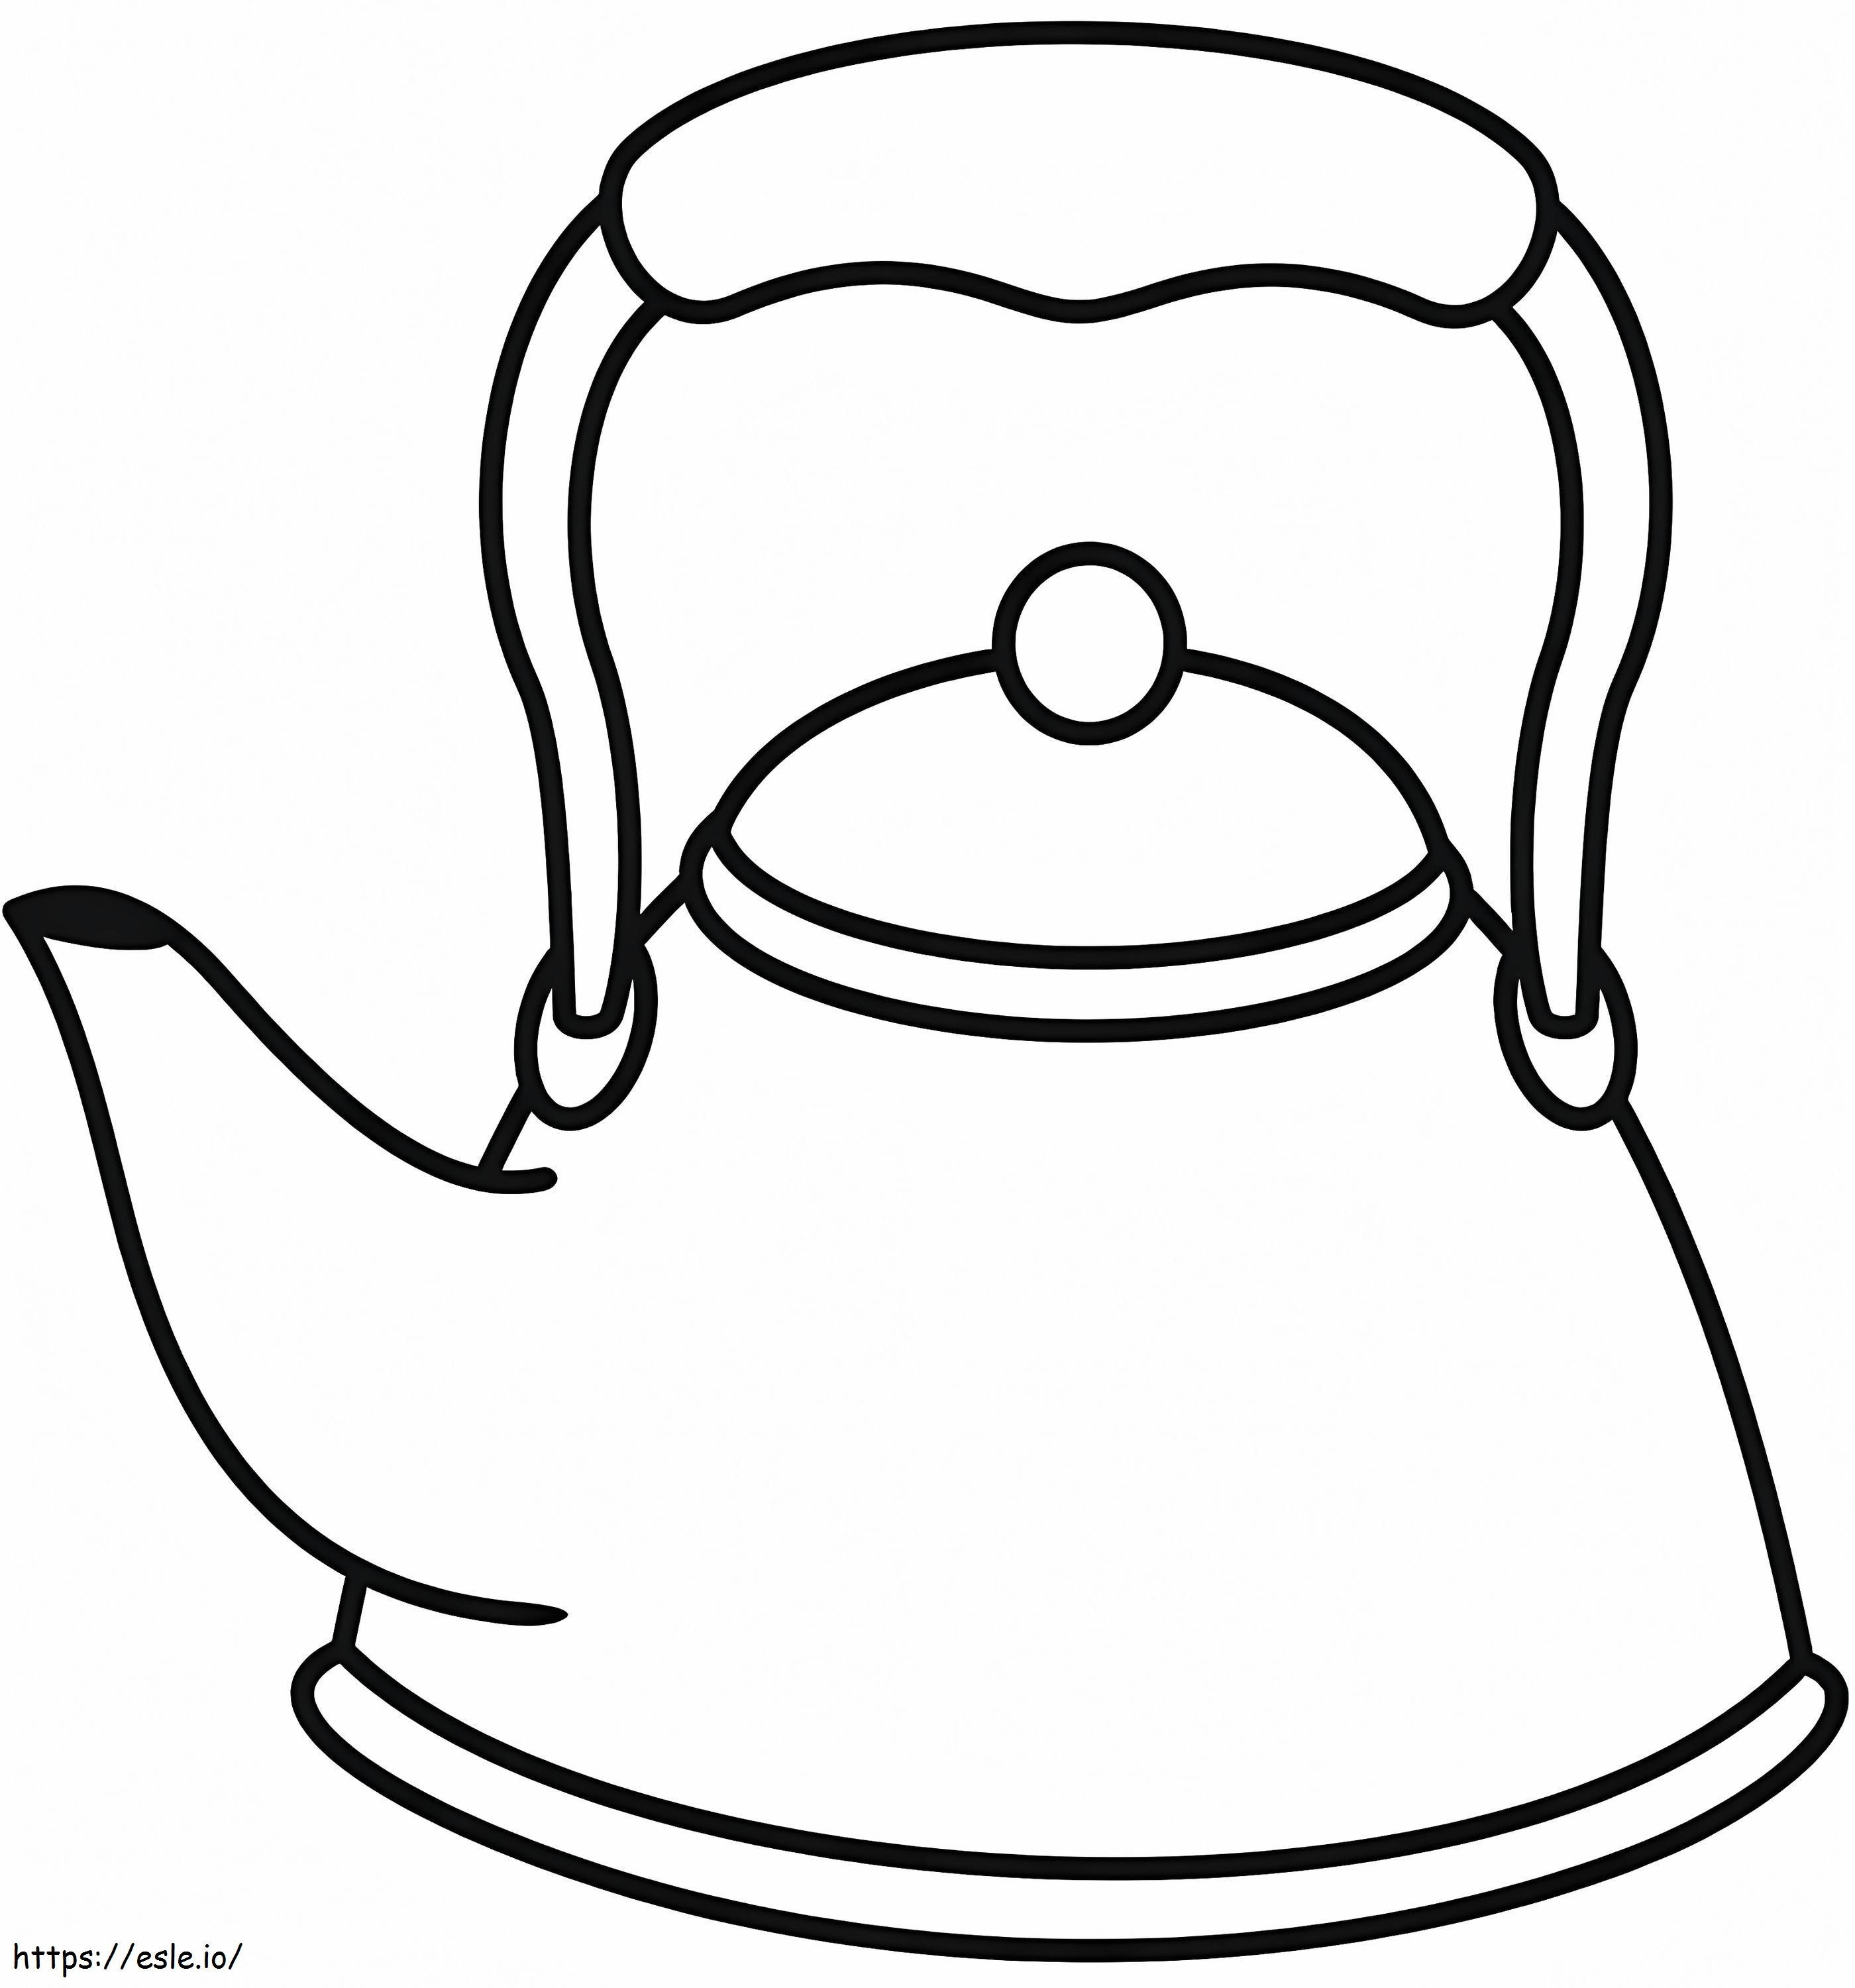 Um bule de chá para colorir